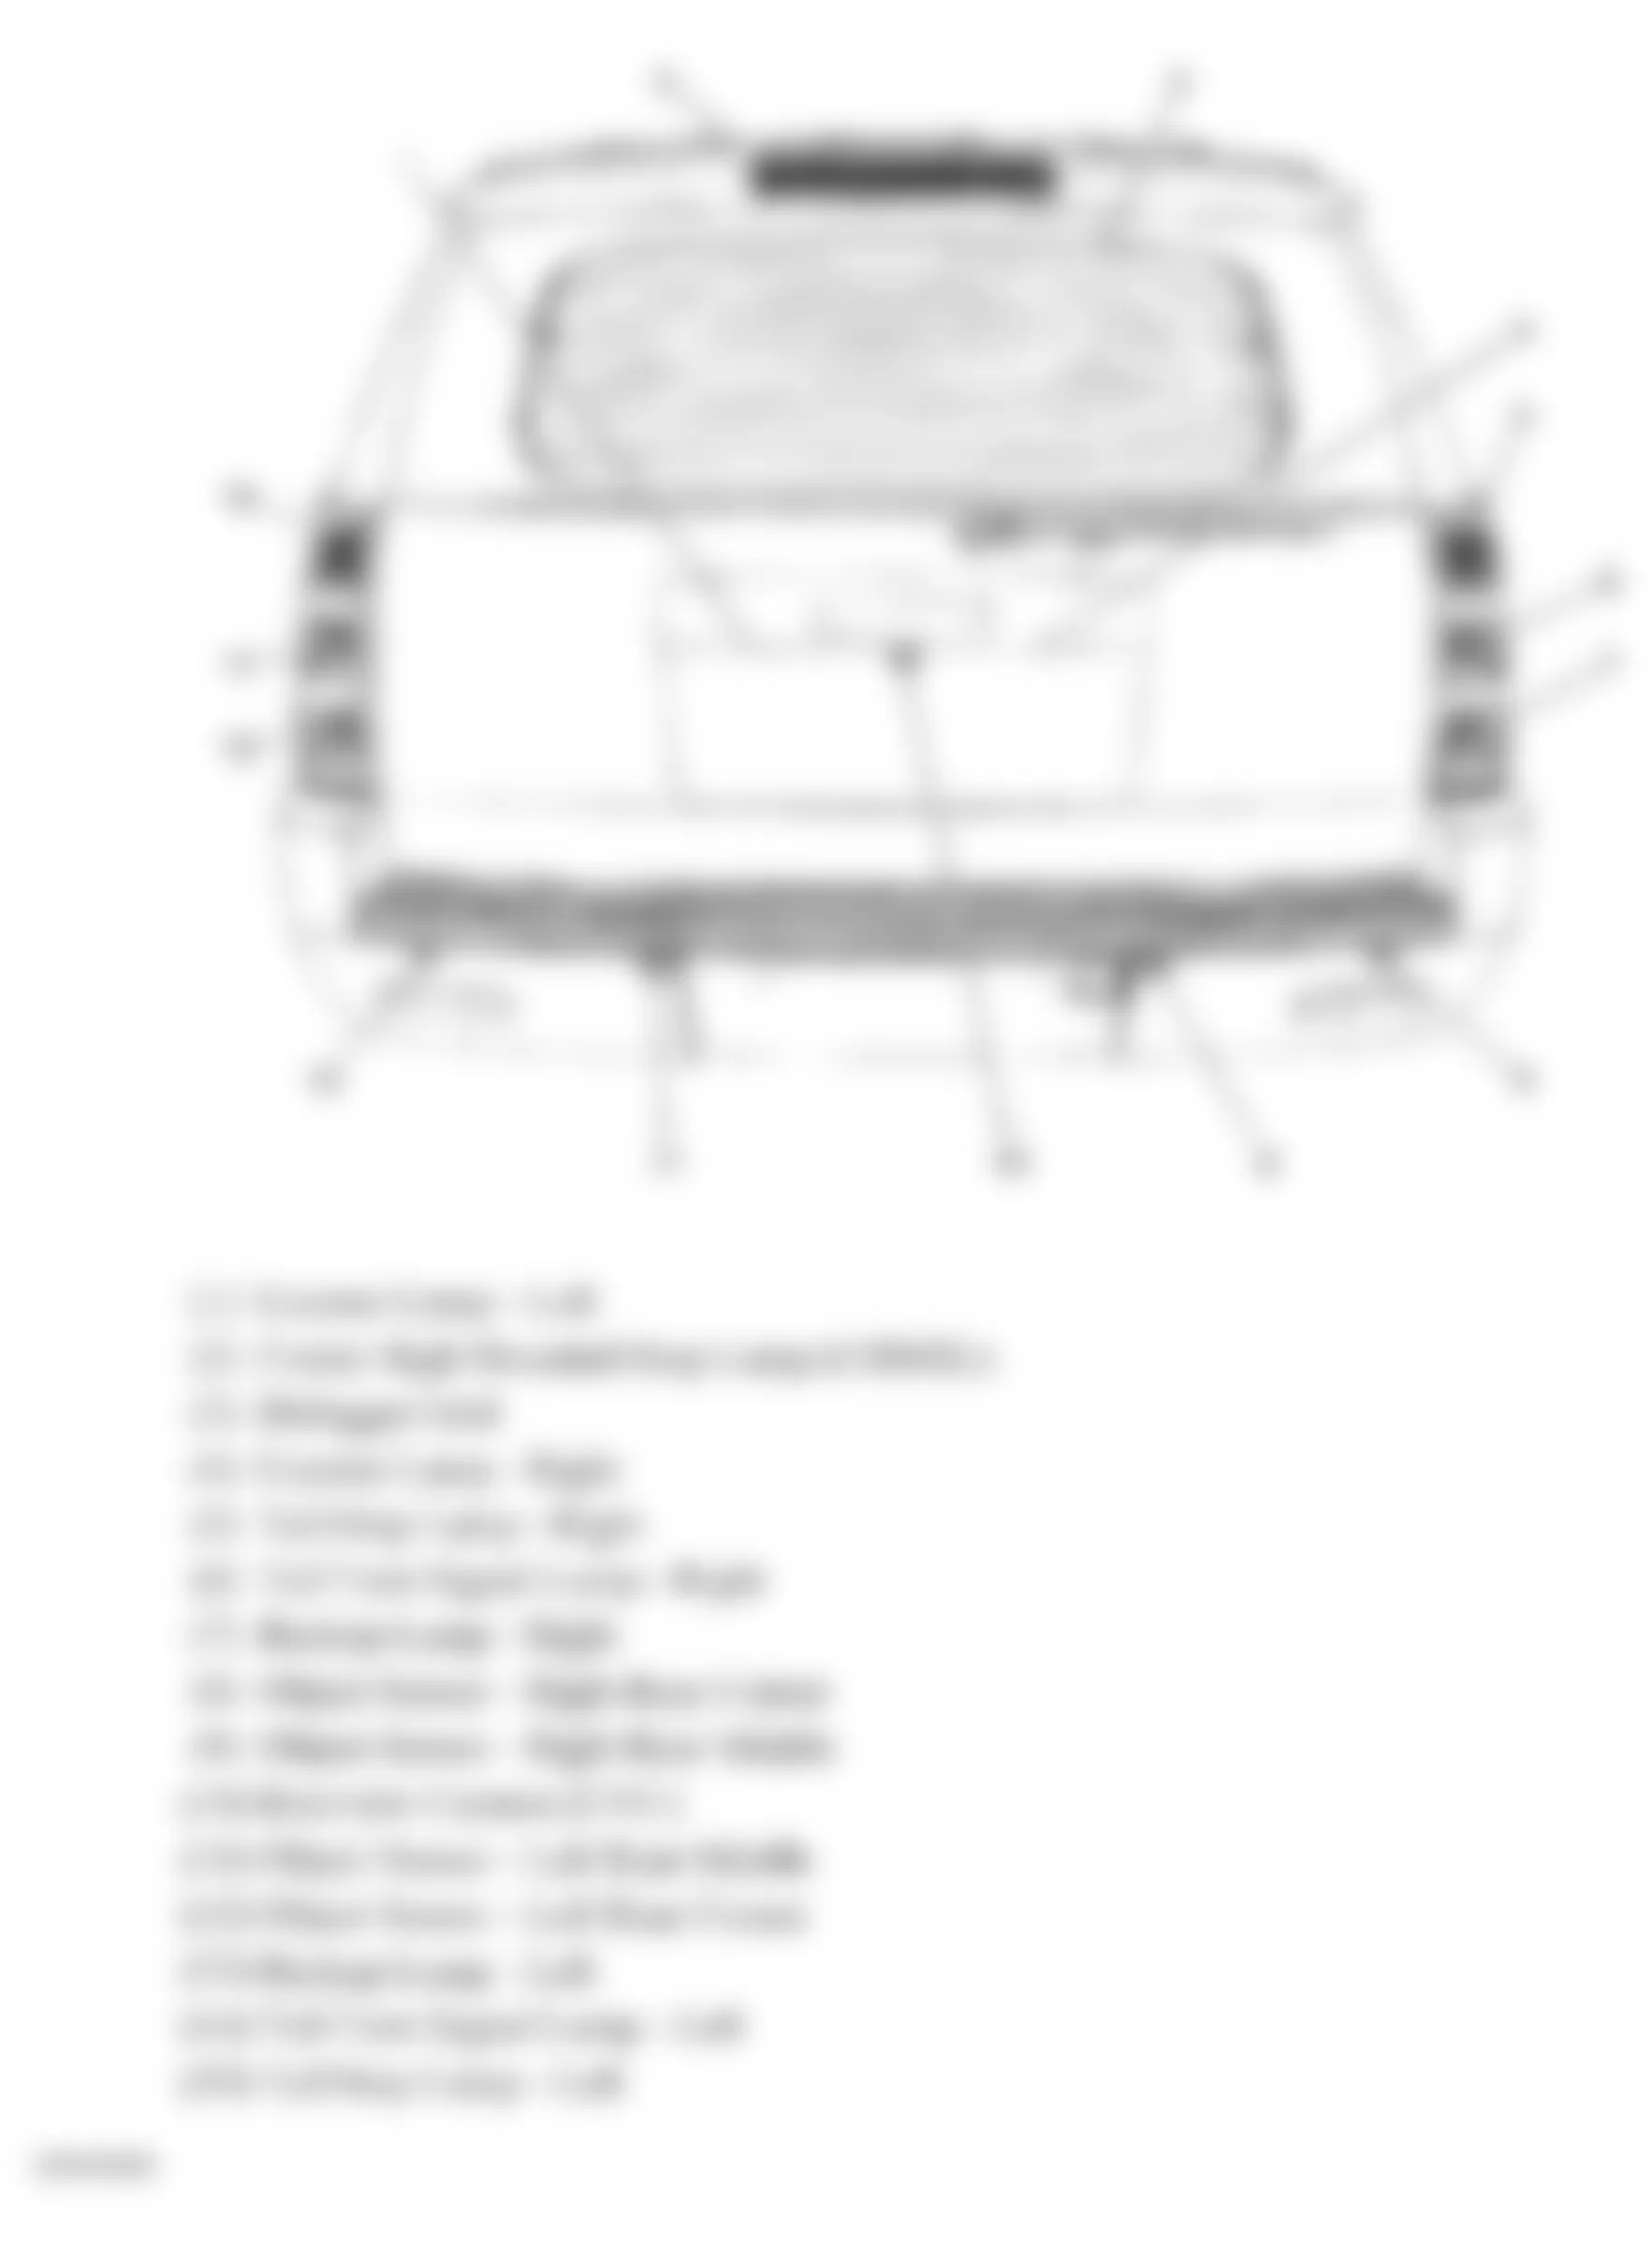 GMC Yukon XL K1500 2008 - Component Locations -  Rear Of Vehicle (Yukon W/One Piece Liftgate)